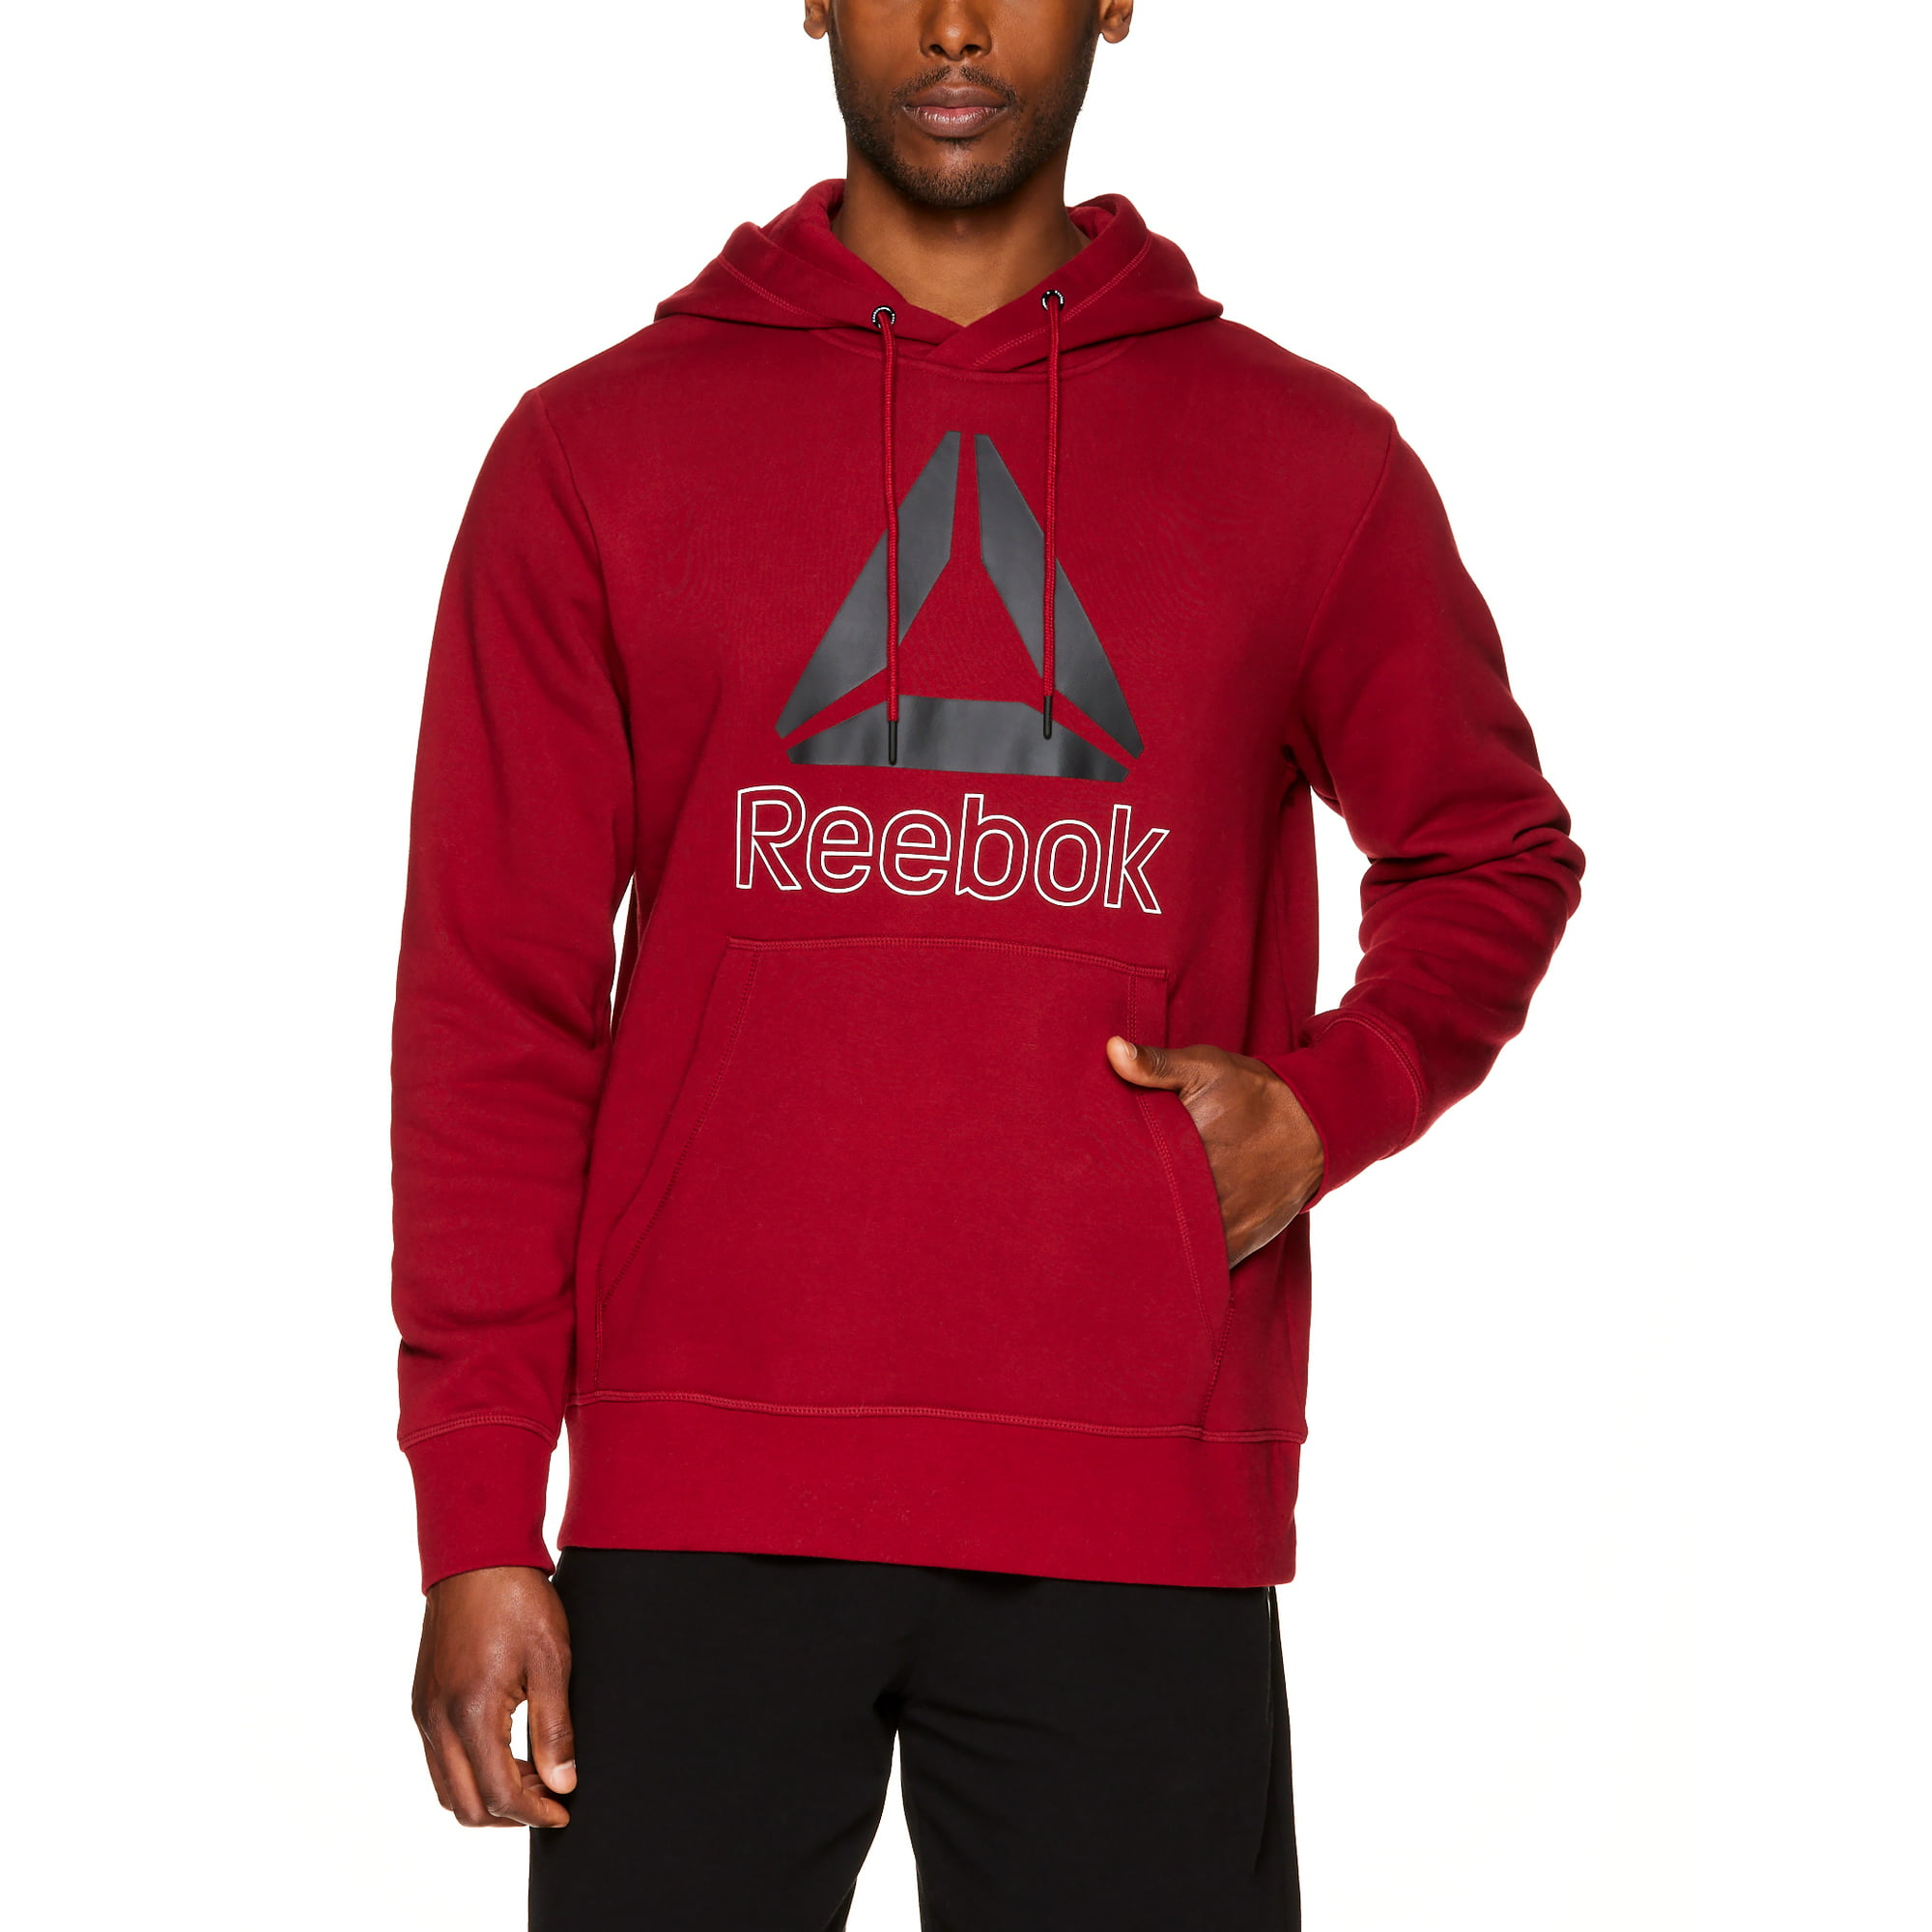 Reebok Logo Sweathirts & Pullovers for Men